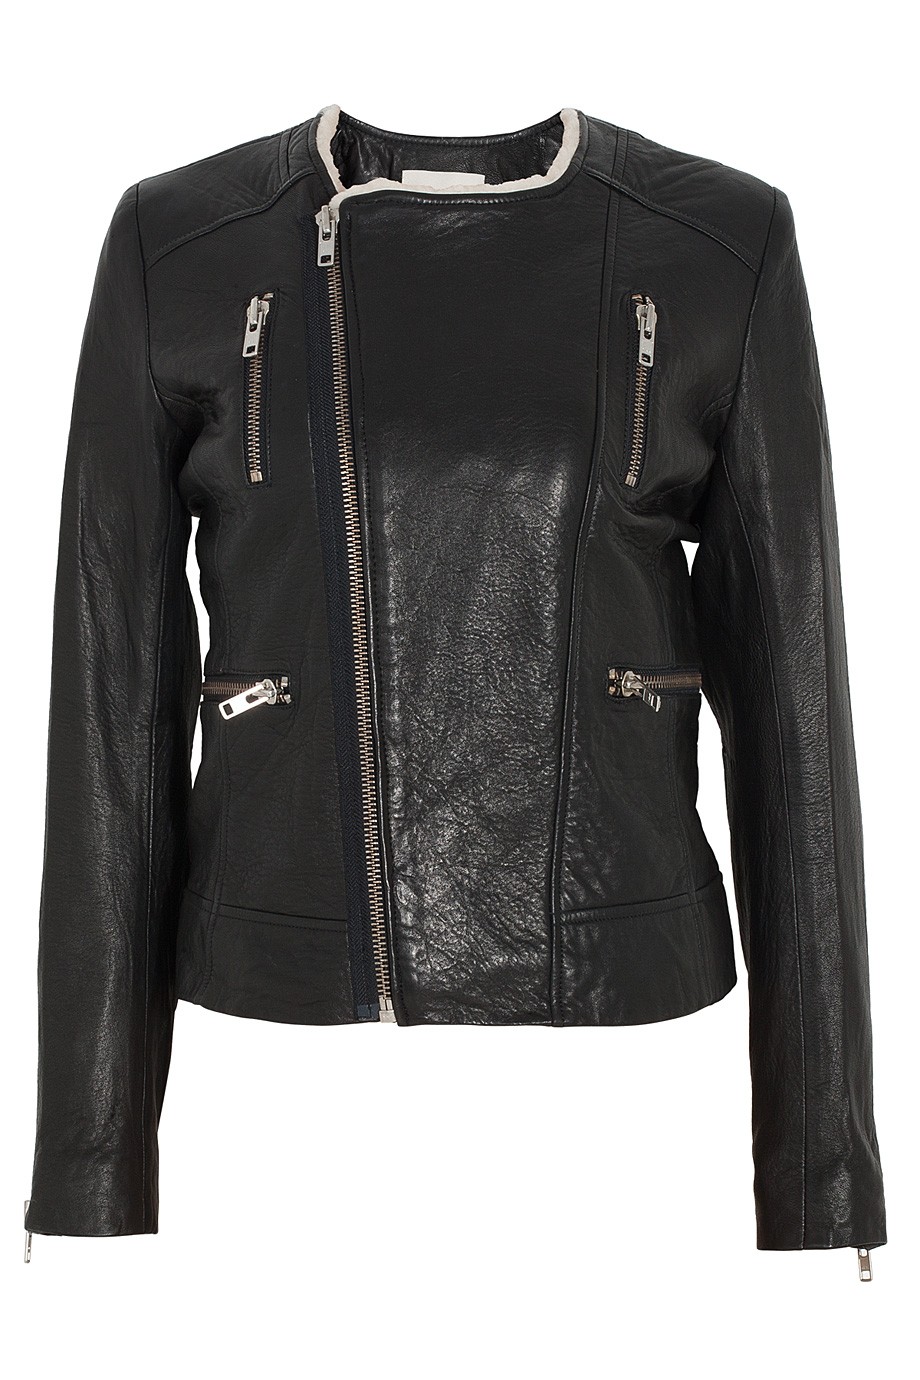 Iro Leather Jackets – Jackets